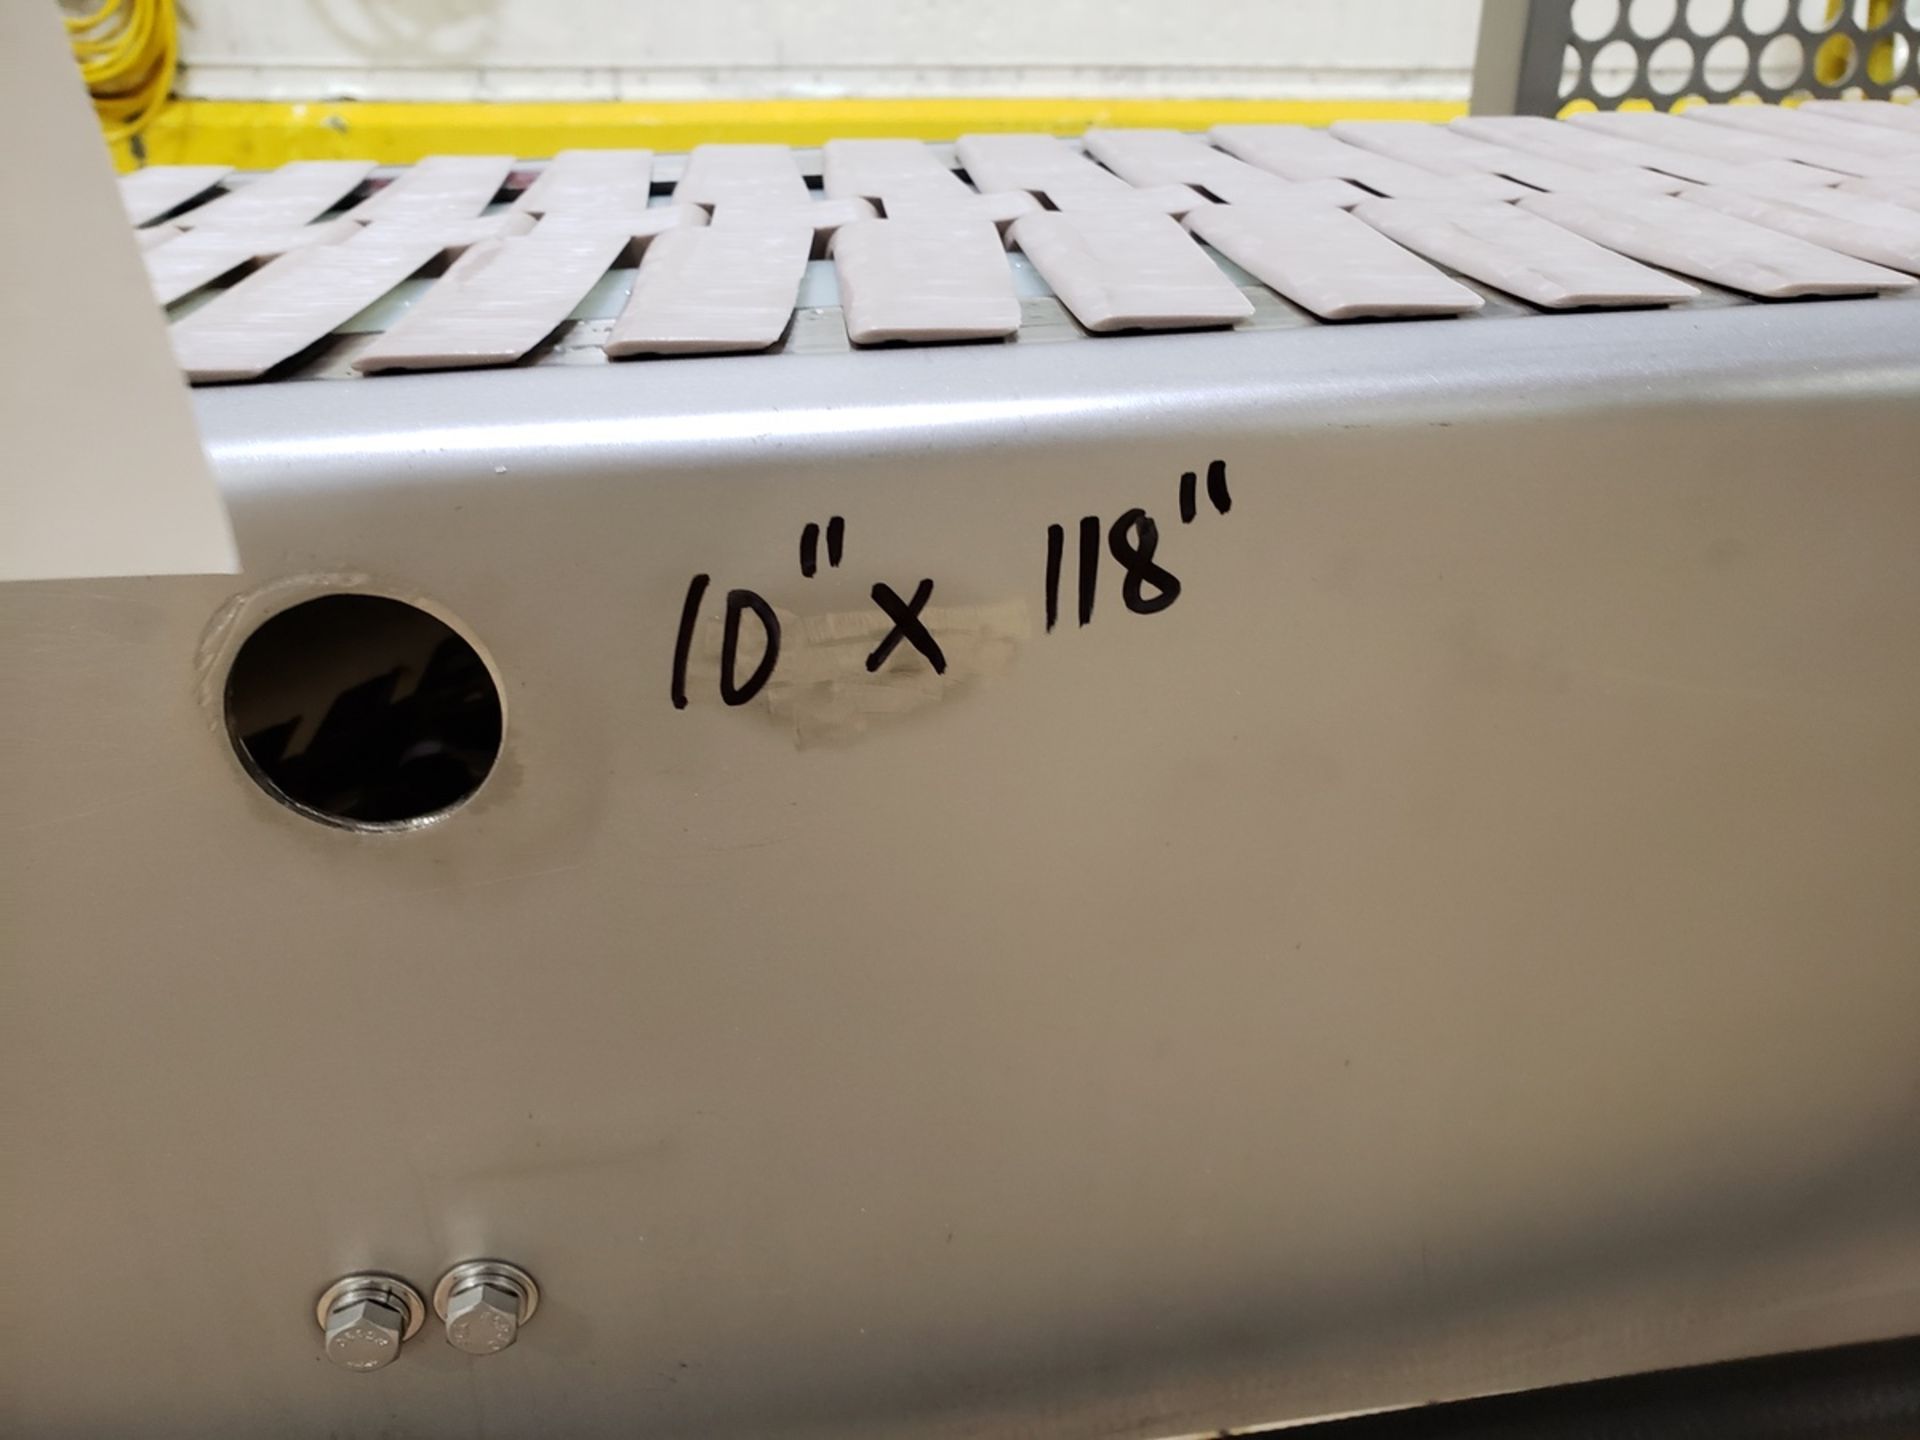 Transfer Belt Conveyor, 10" X 118" | Rig Fee: $125 - Image 2 of 2